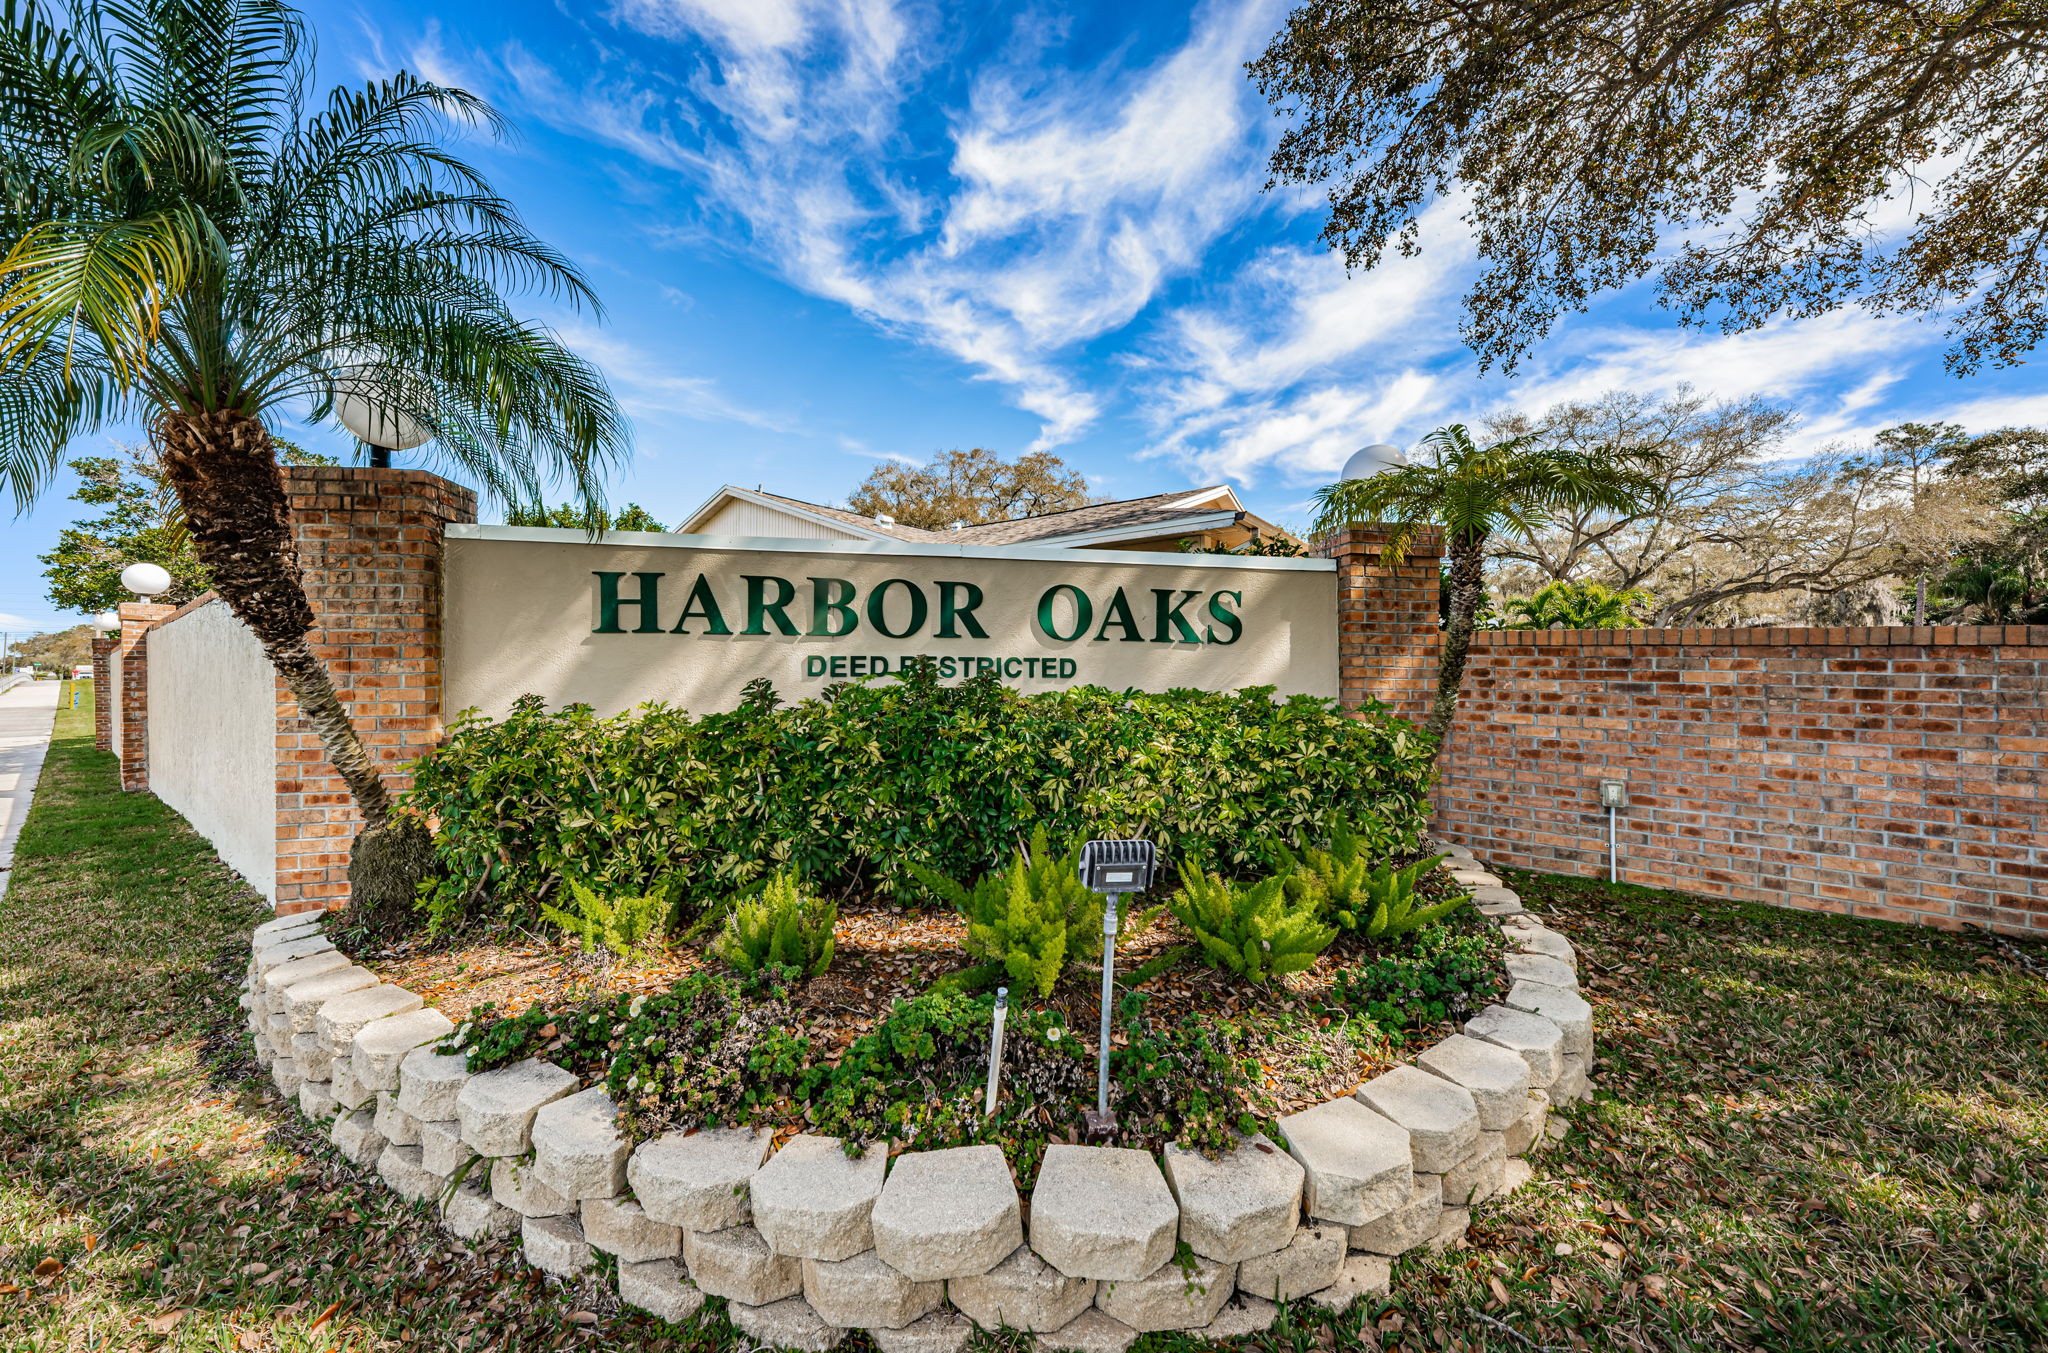 Harbor Oaks1